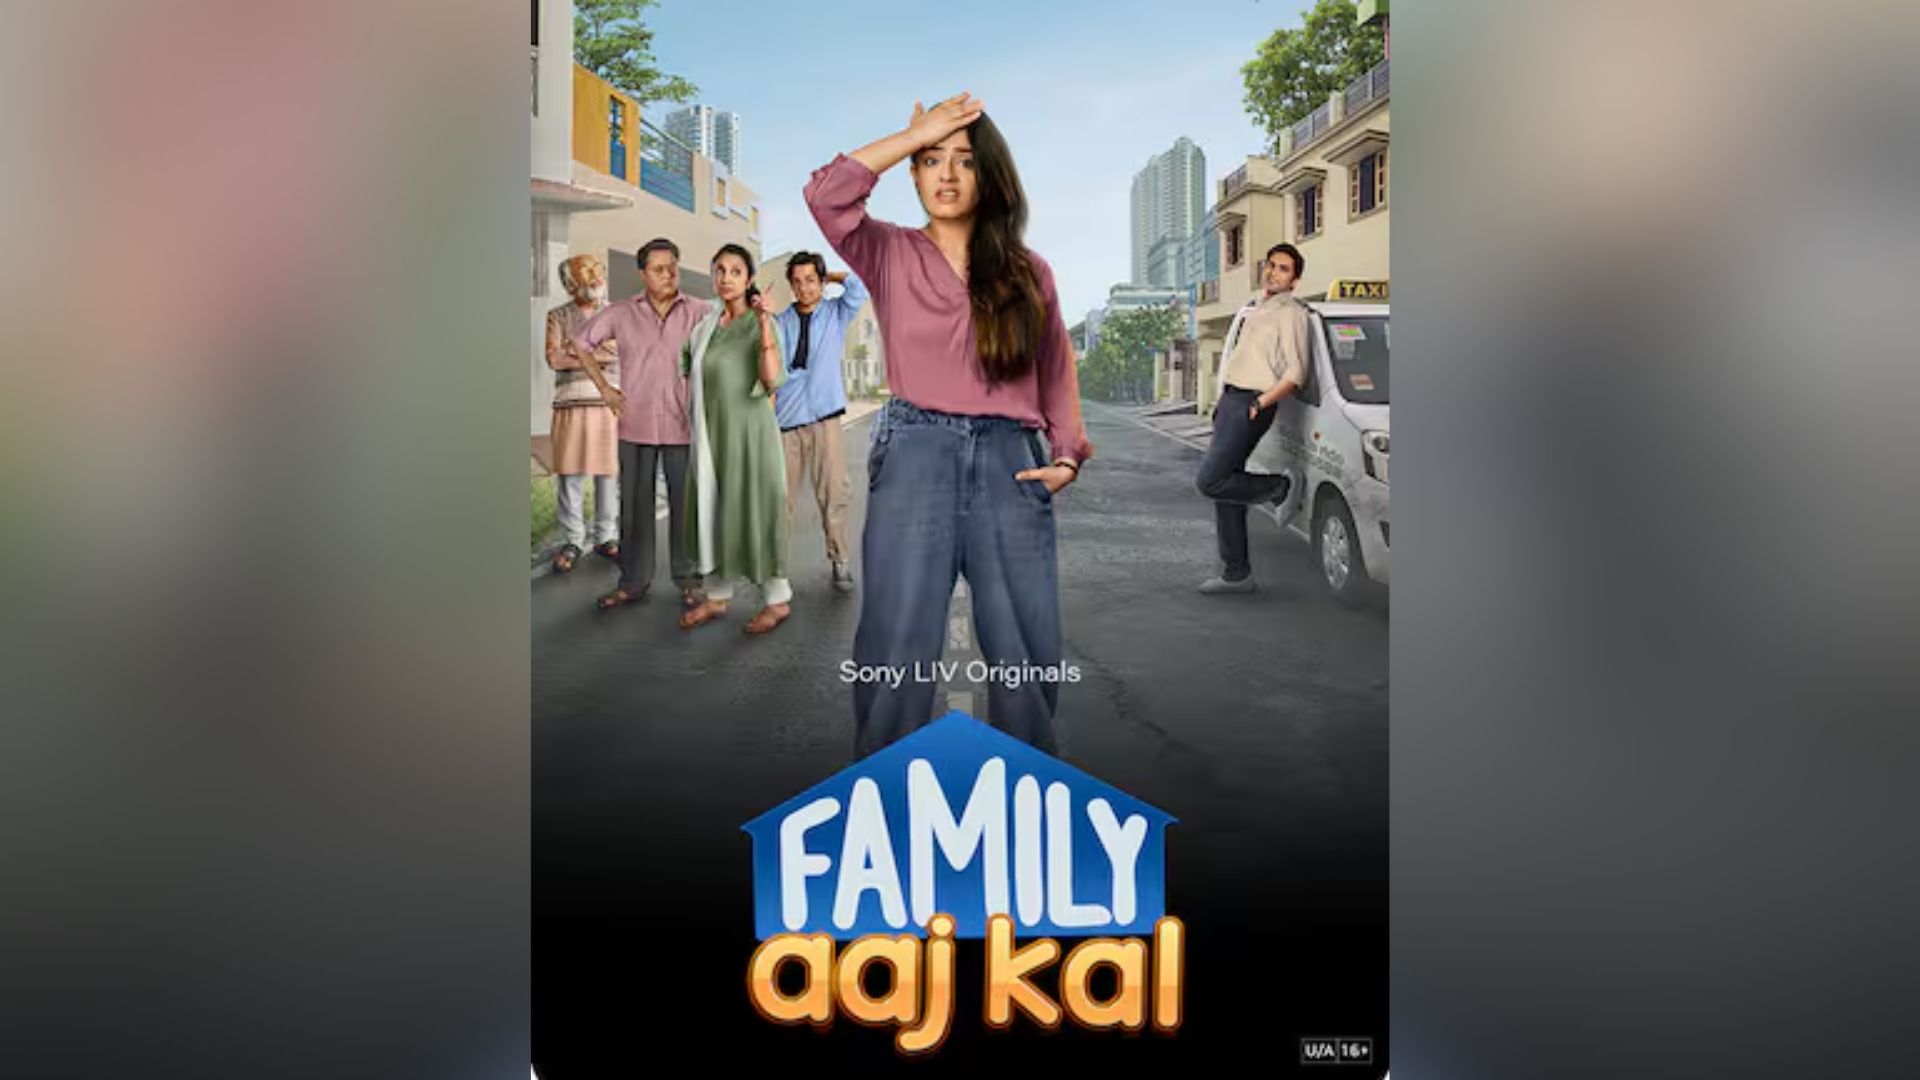 New Indian Family Drama ‘Family Aaj Kal’ Set to Premiere on Sony LIV